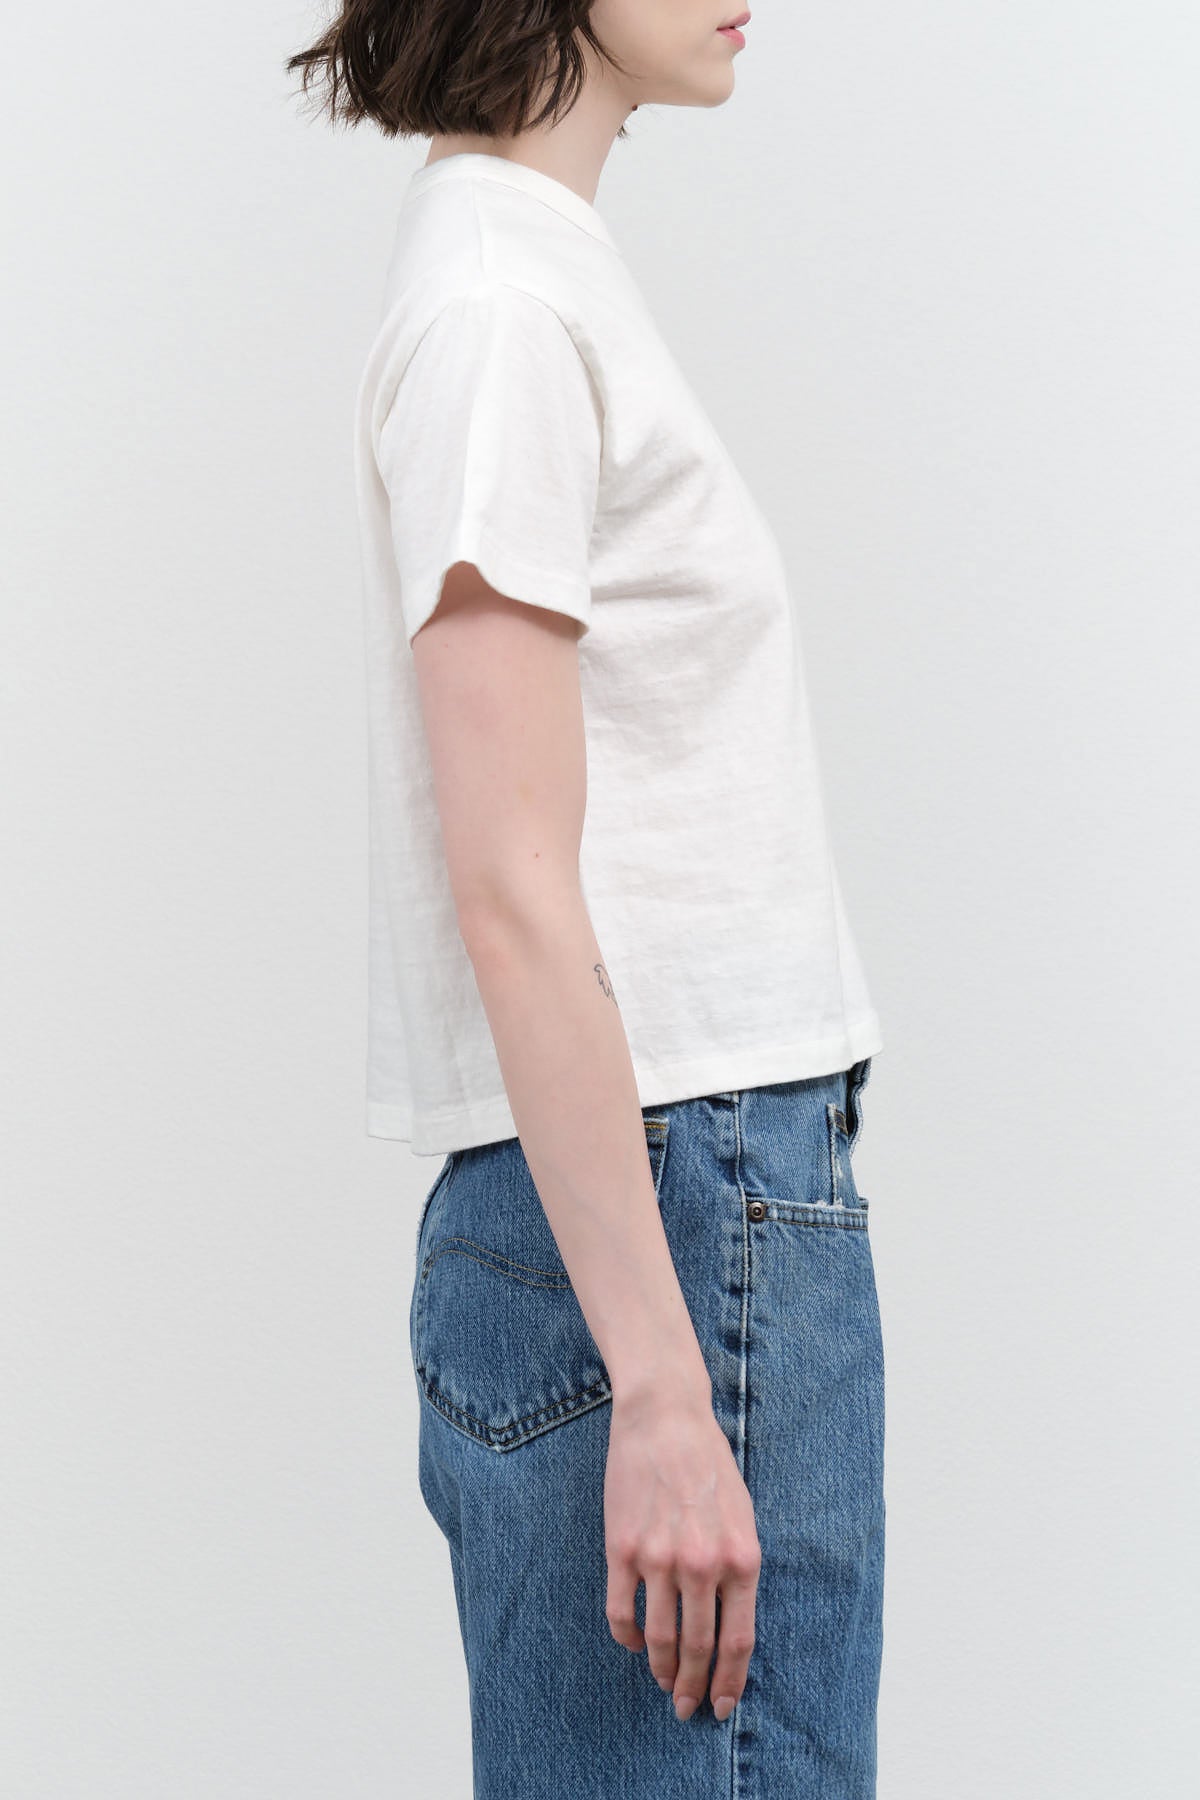 Hi'aka Short Sleeve White Tee Shirt by Sunray Sportswear with Ribbed Collar